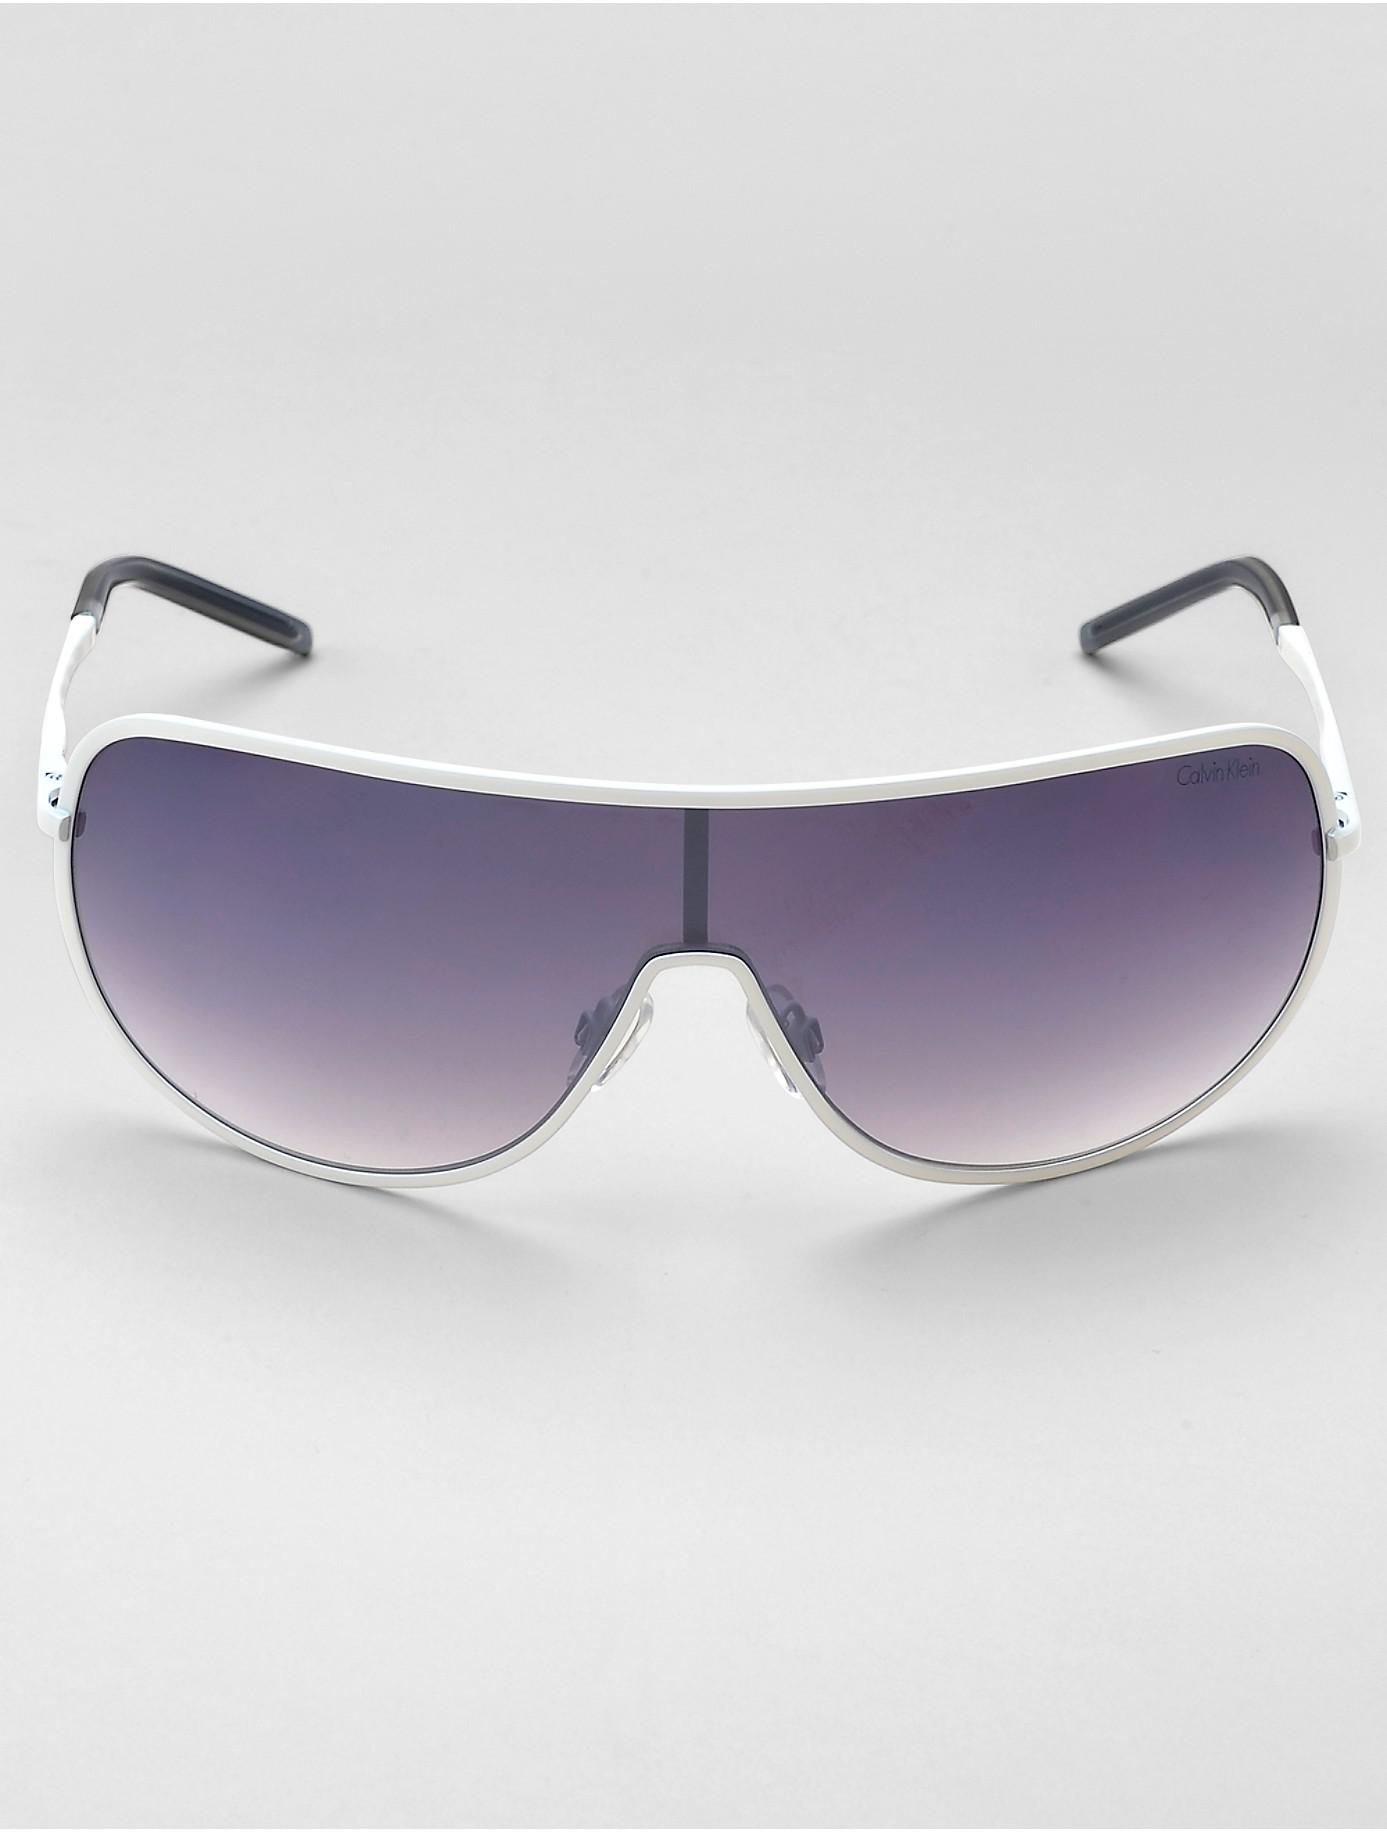 Sunglasses Calvin Klein CK22533S (001) Unisex | Free Shipping Shop Online-lmd.edu.vn